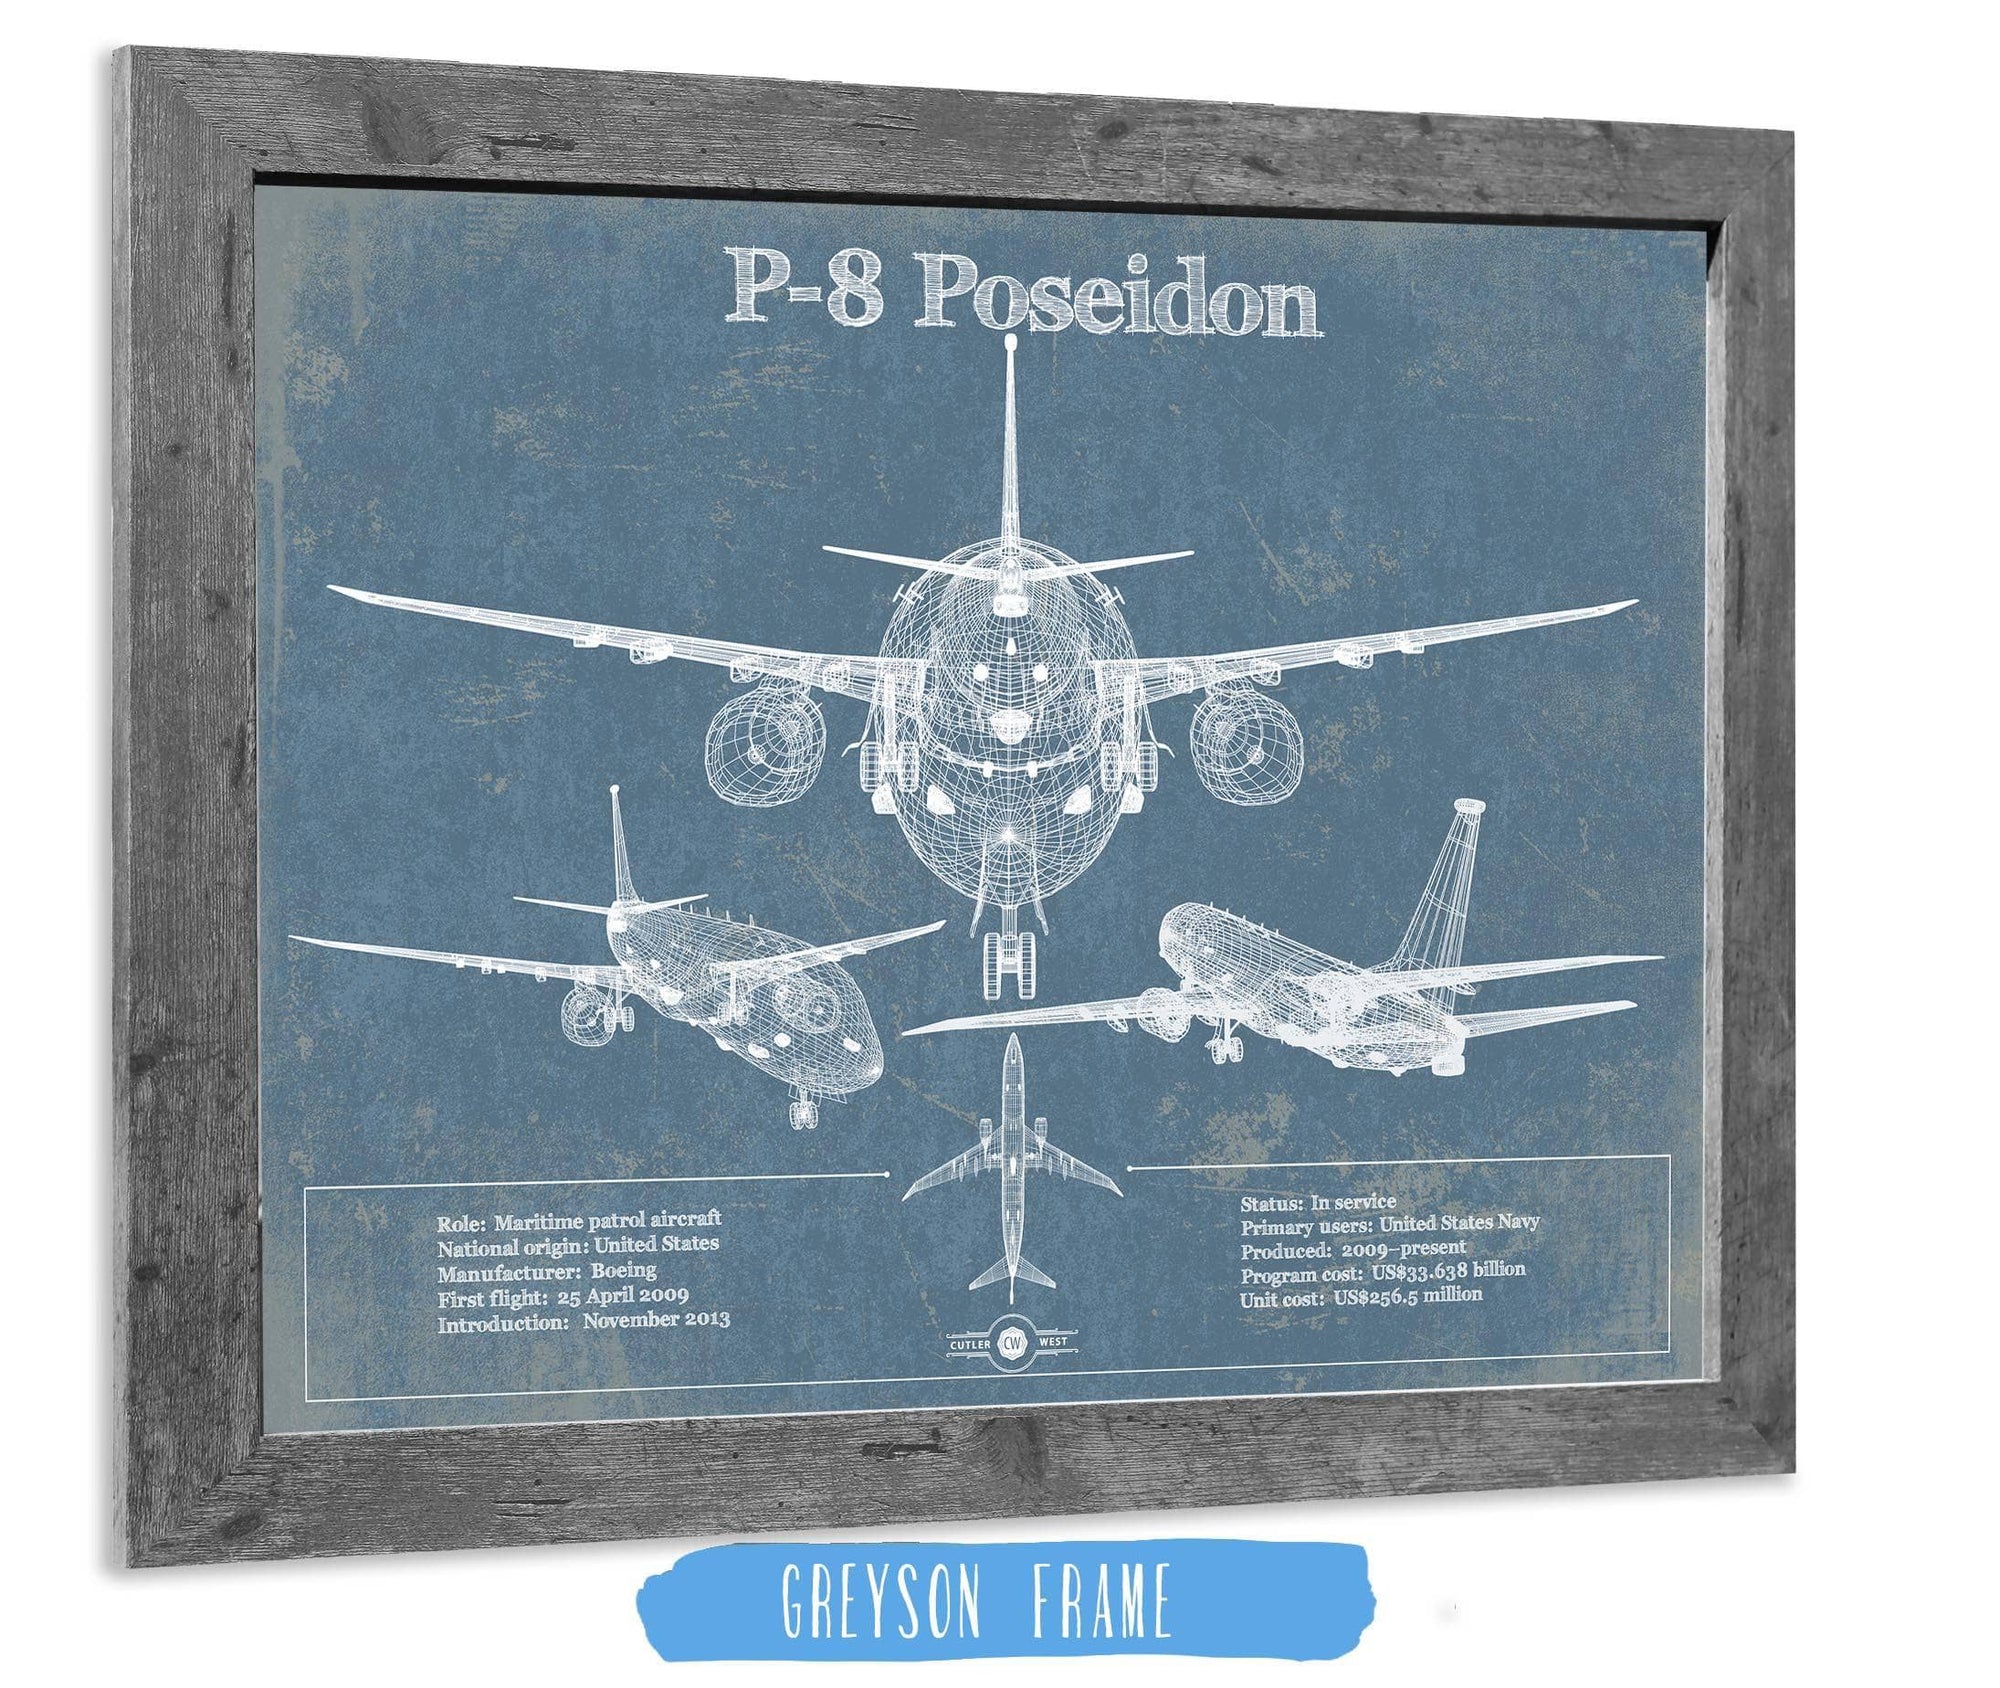 Cutler West Military Aircraft 14" x 11" / Greyson Frame P-8 Poseidon Aircraft Blueprint Original Military Wall Art 801226429-TOP